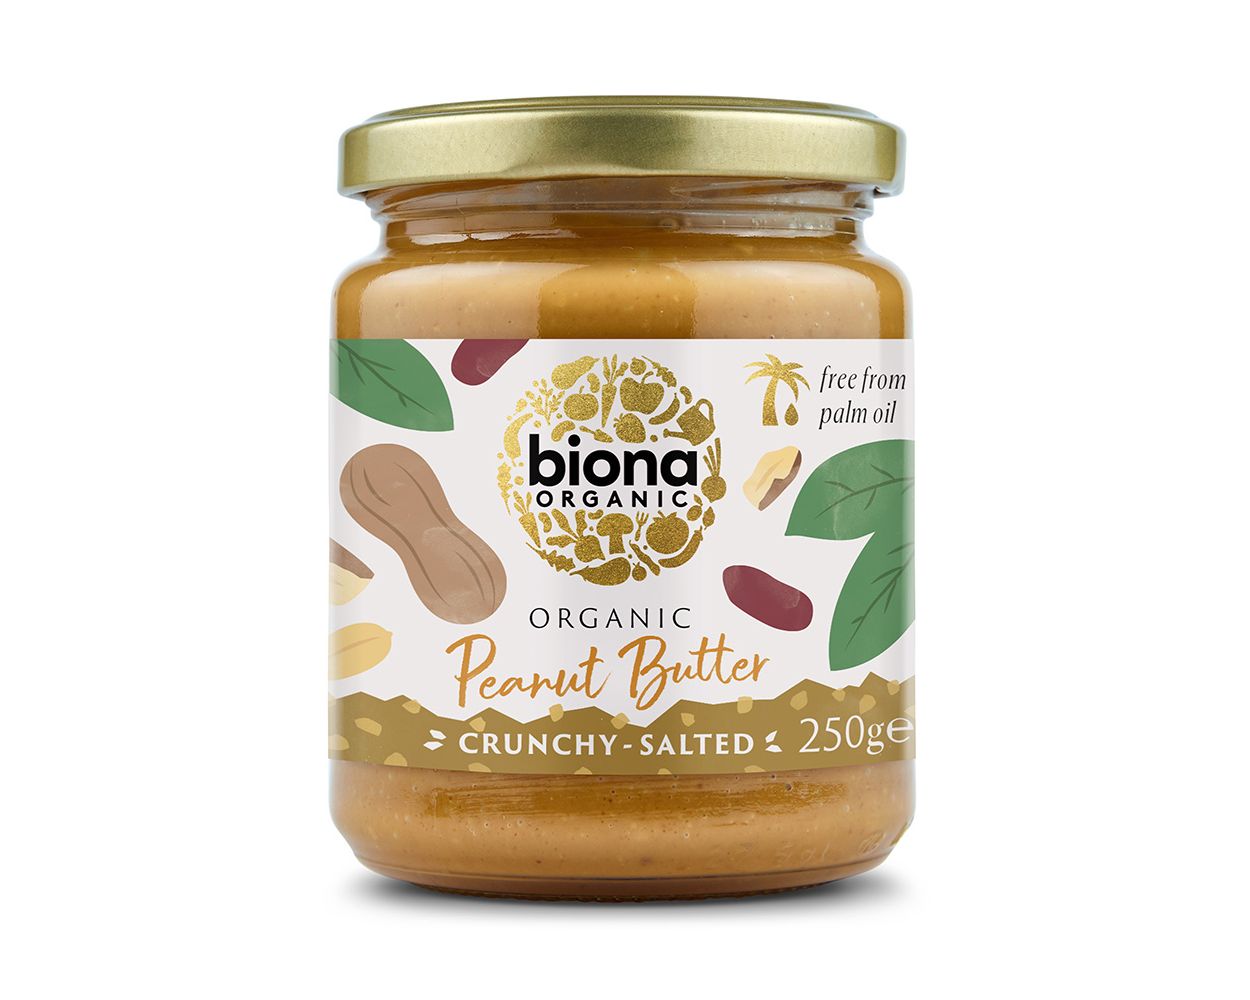 Biona Bio-Quality Sea-Salted Peanut Butter Crunchy